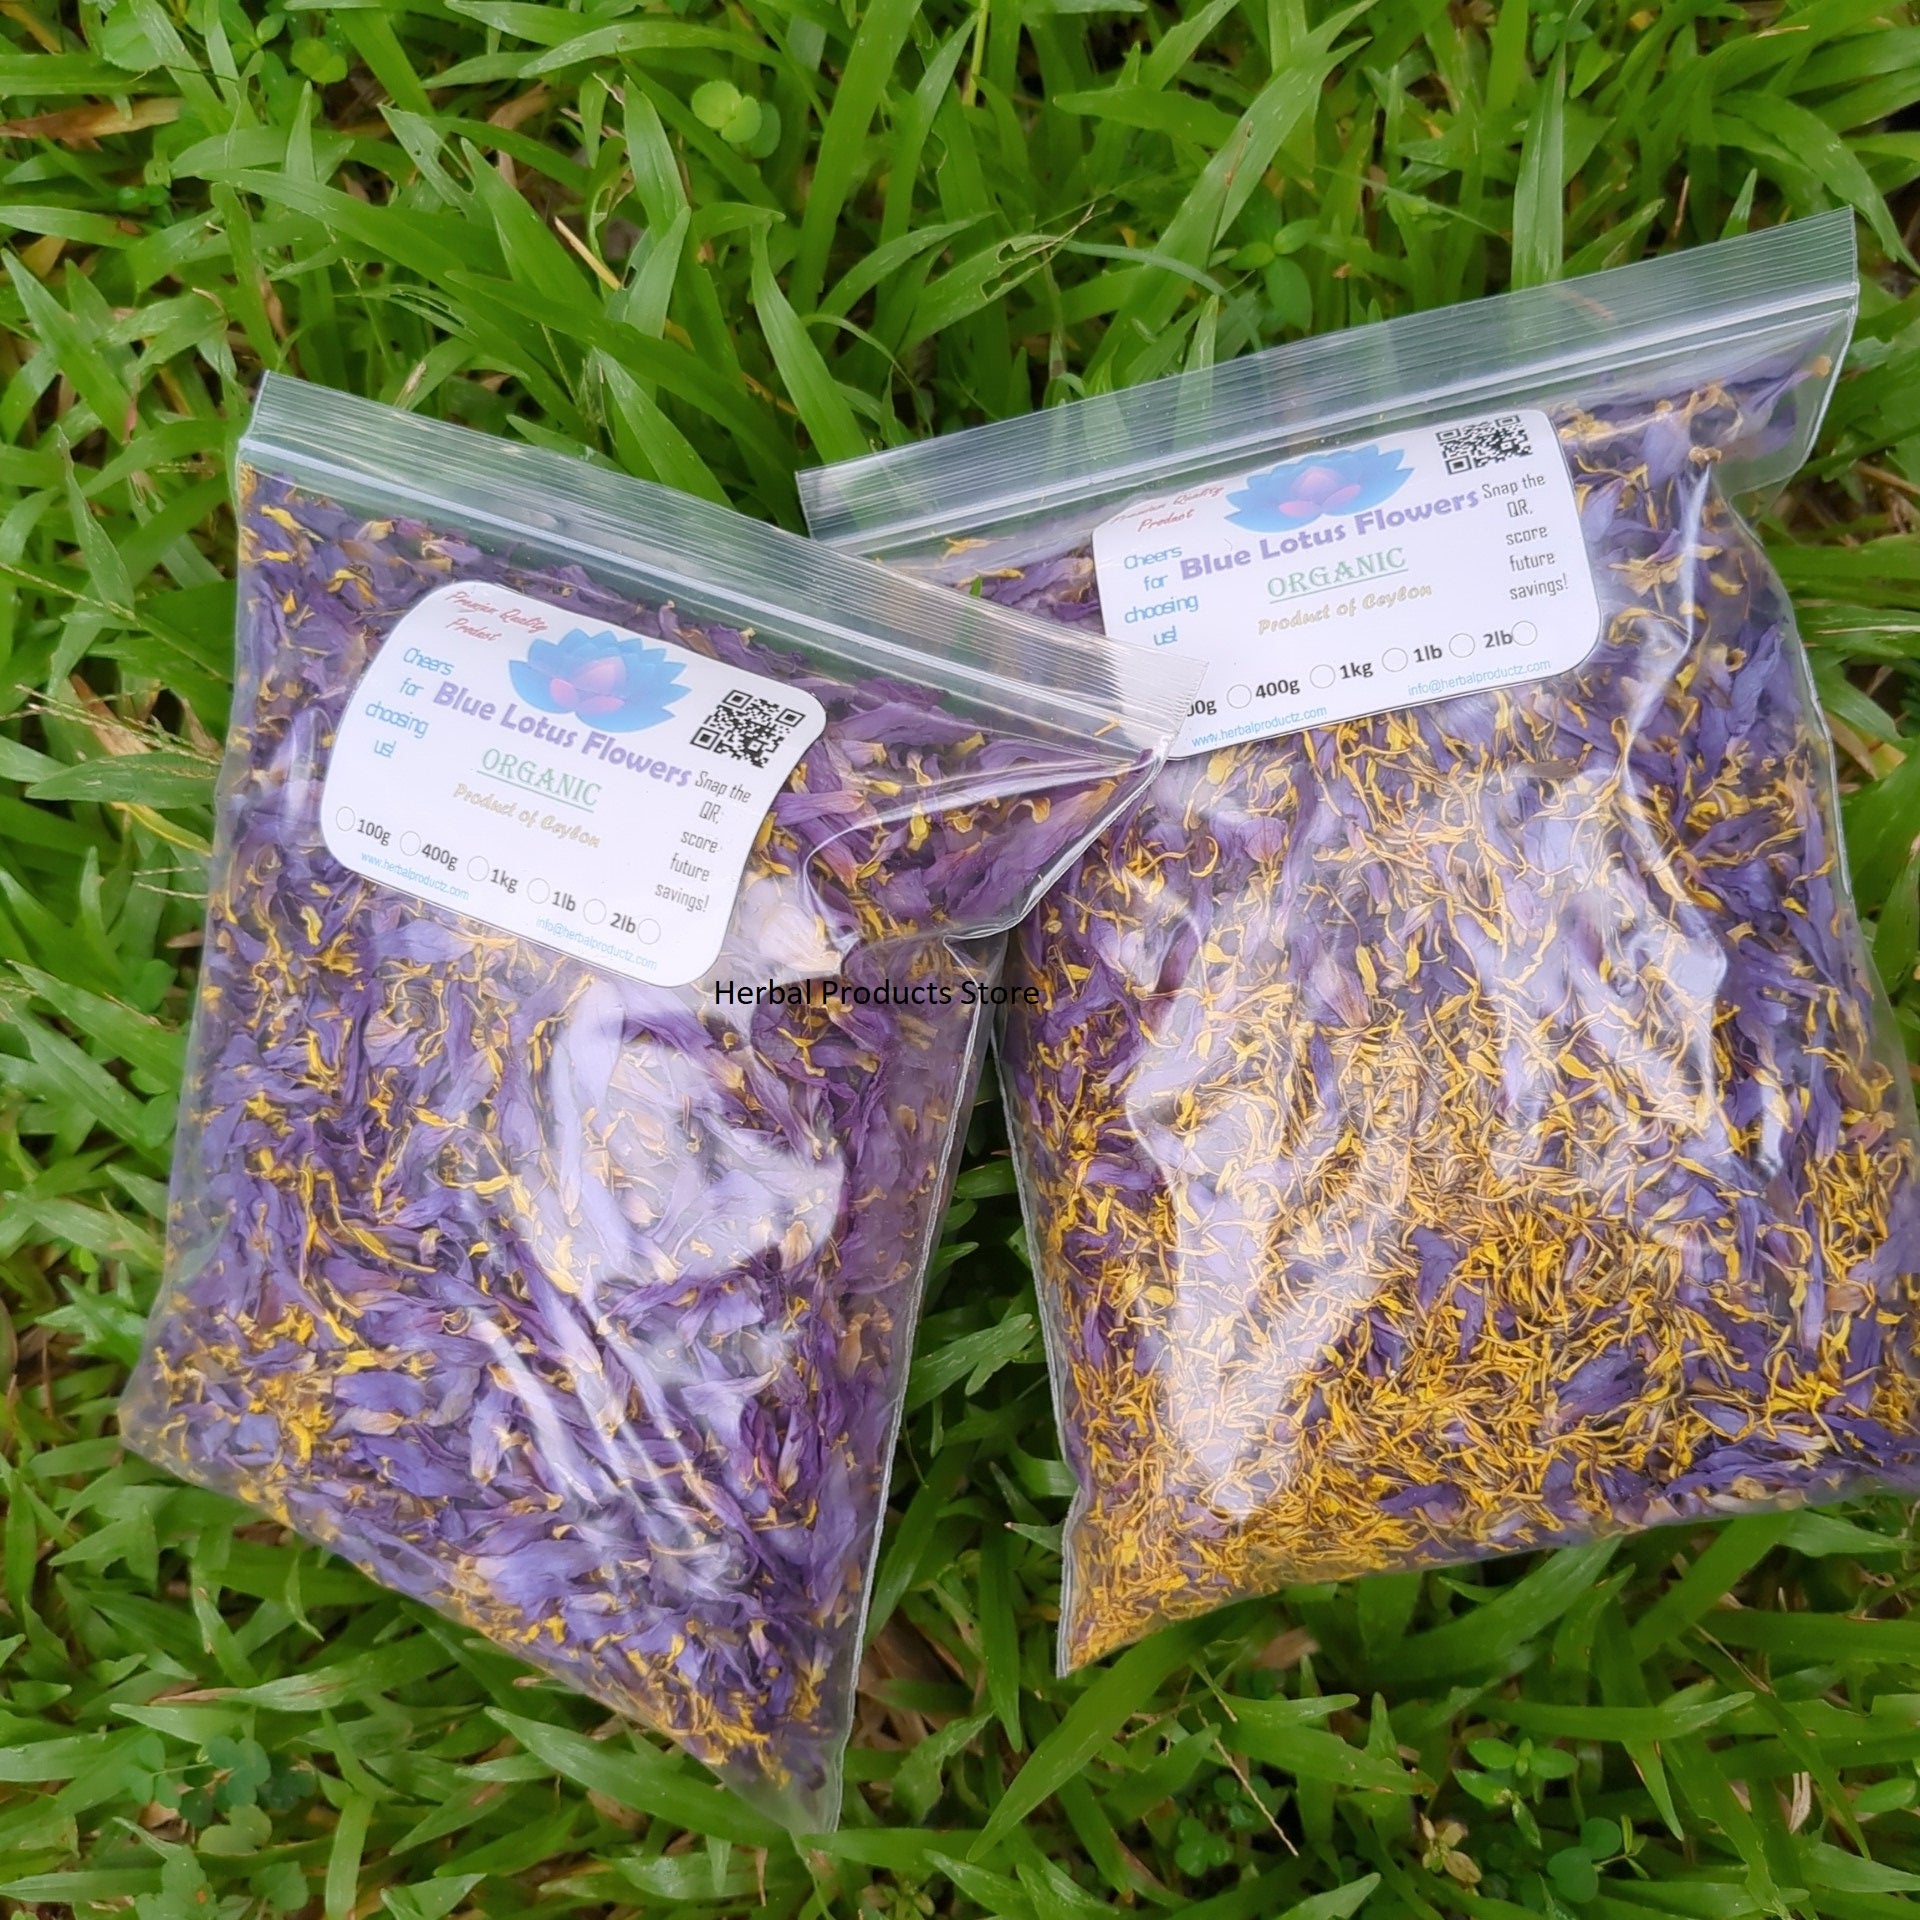 Blue Lotus Flowers Petals & Stamen Dried Nymphaea Caerulea Natural Organic Herbal Tea